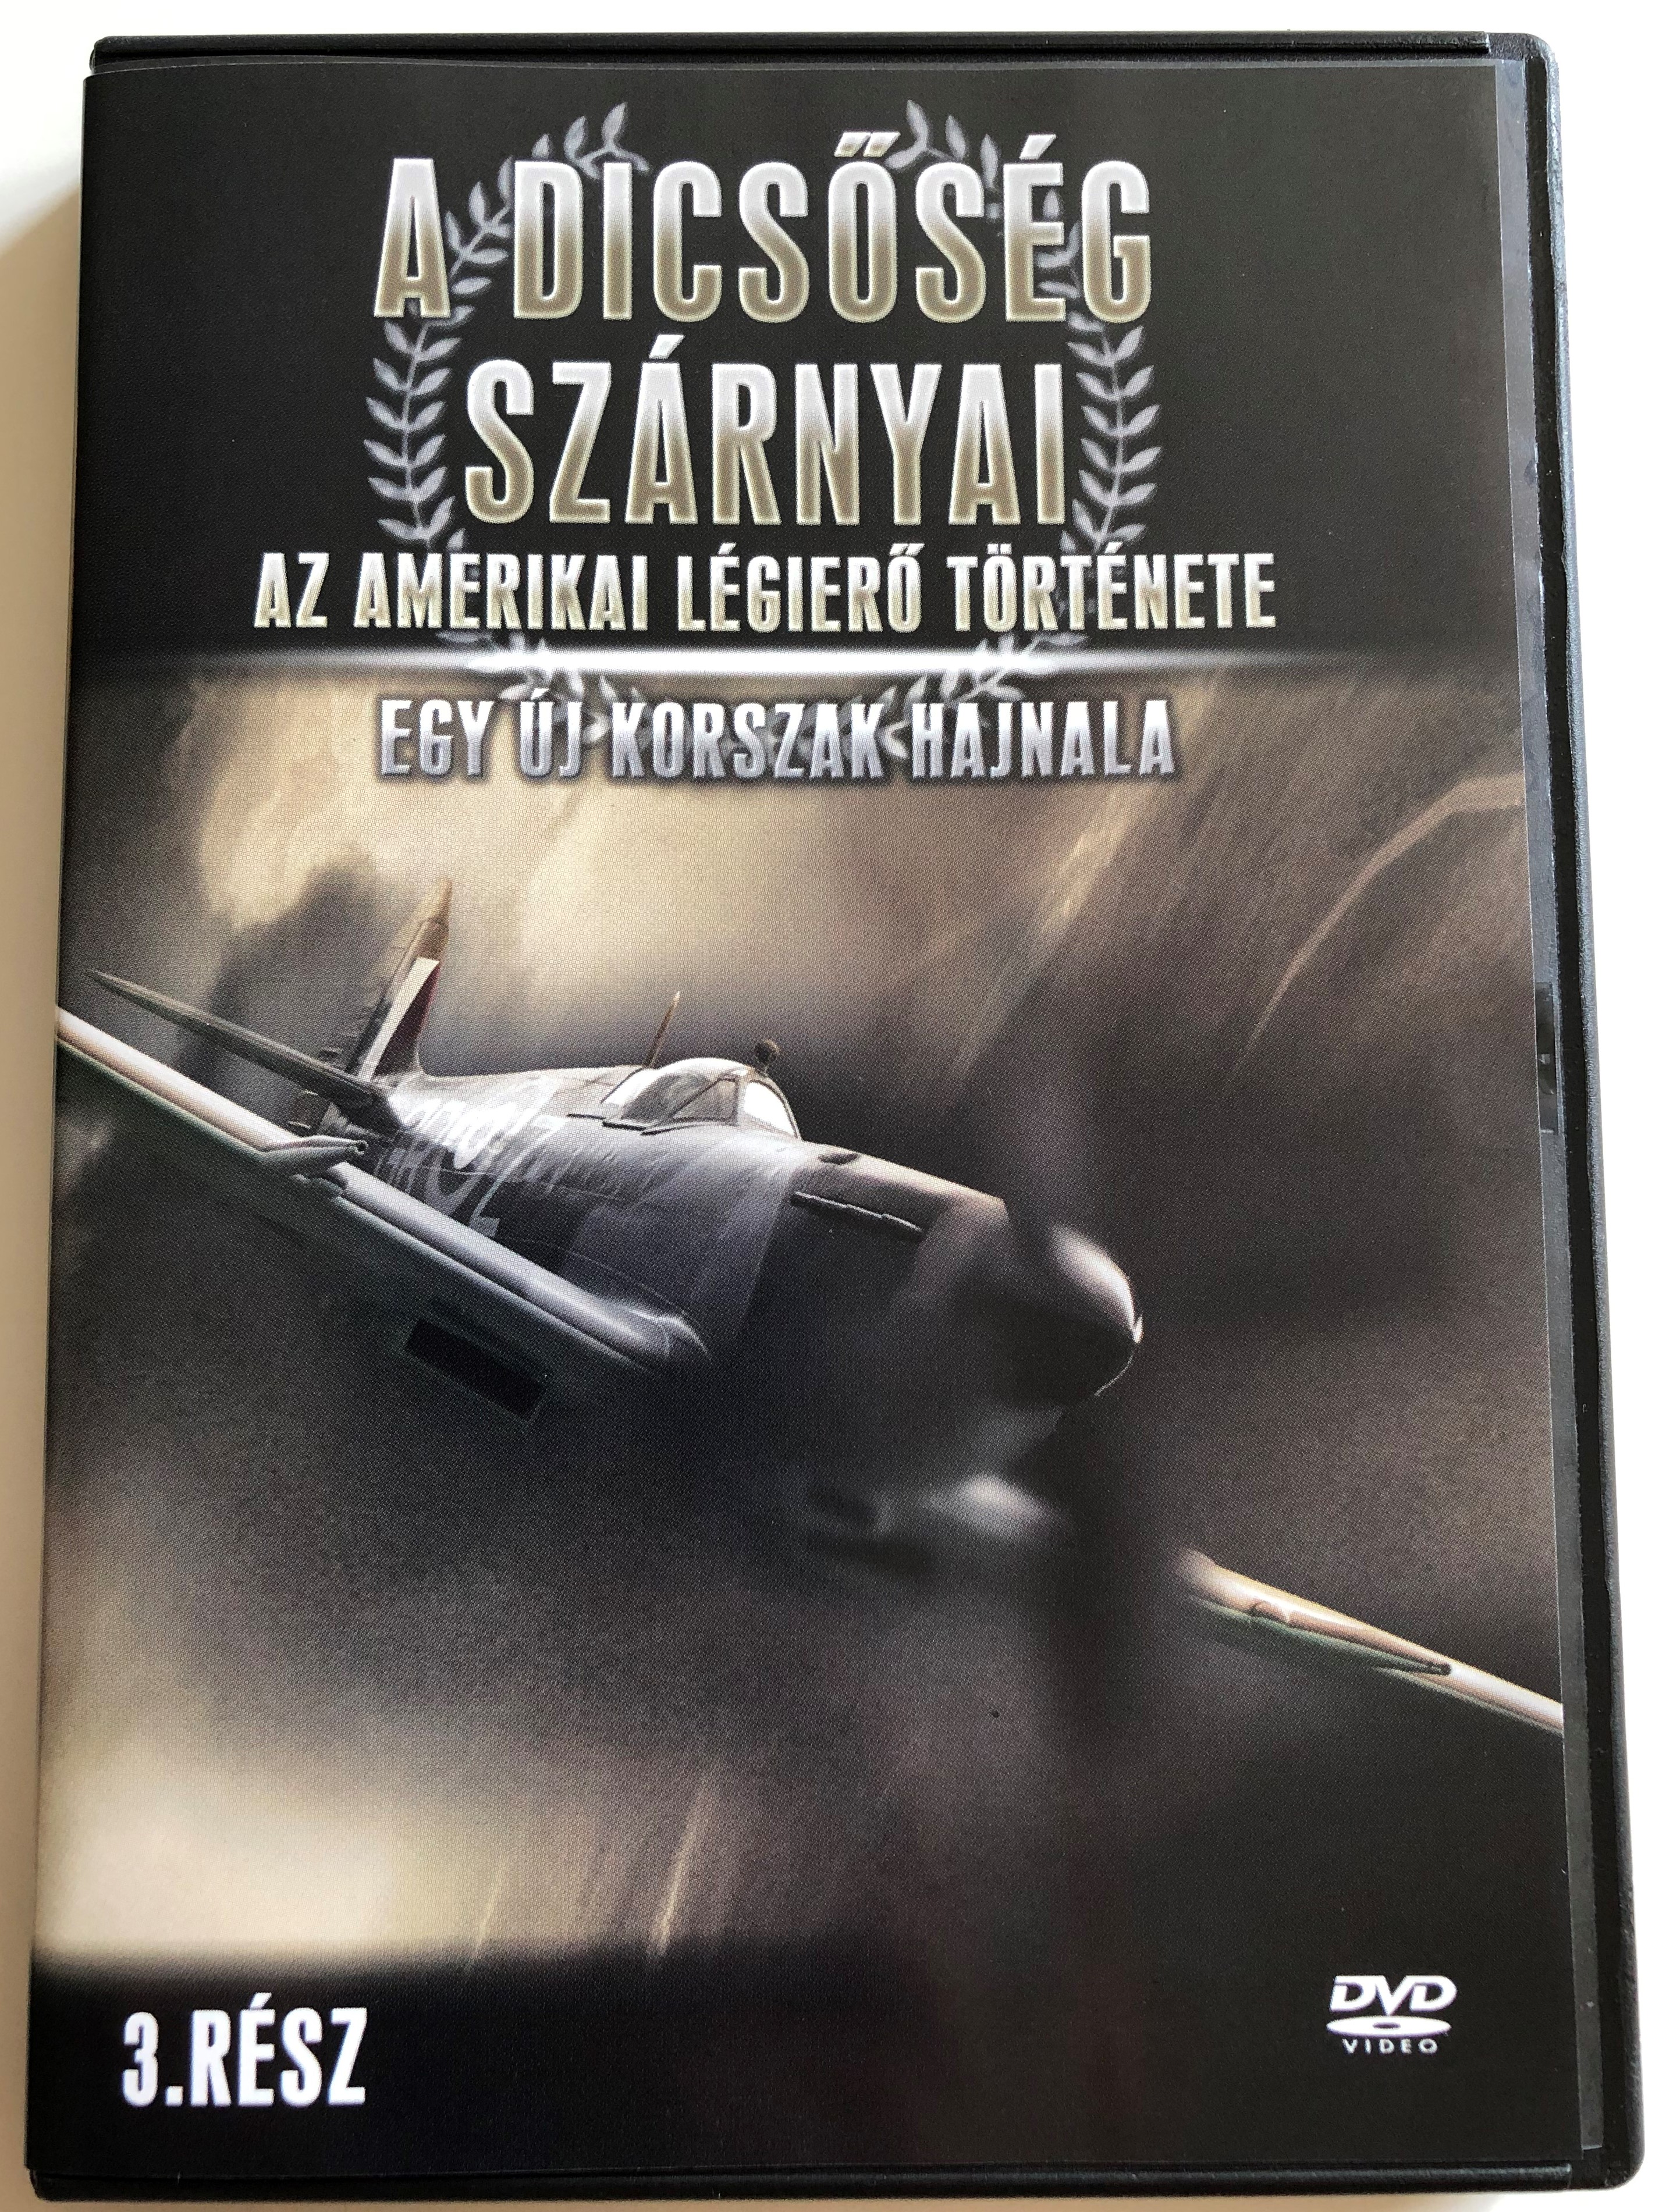 the-wings-of-glory-the-air-force-story-dawn-of-a-new-age-dvd-2002-a-dics-s-g-sz-rnyai-az-amerikai-l-gier-t-rt-nete-egy-j-korszak-hajnala-documentary-series-about-usaf-1-.jpg